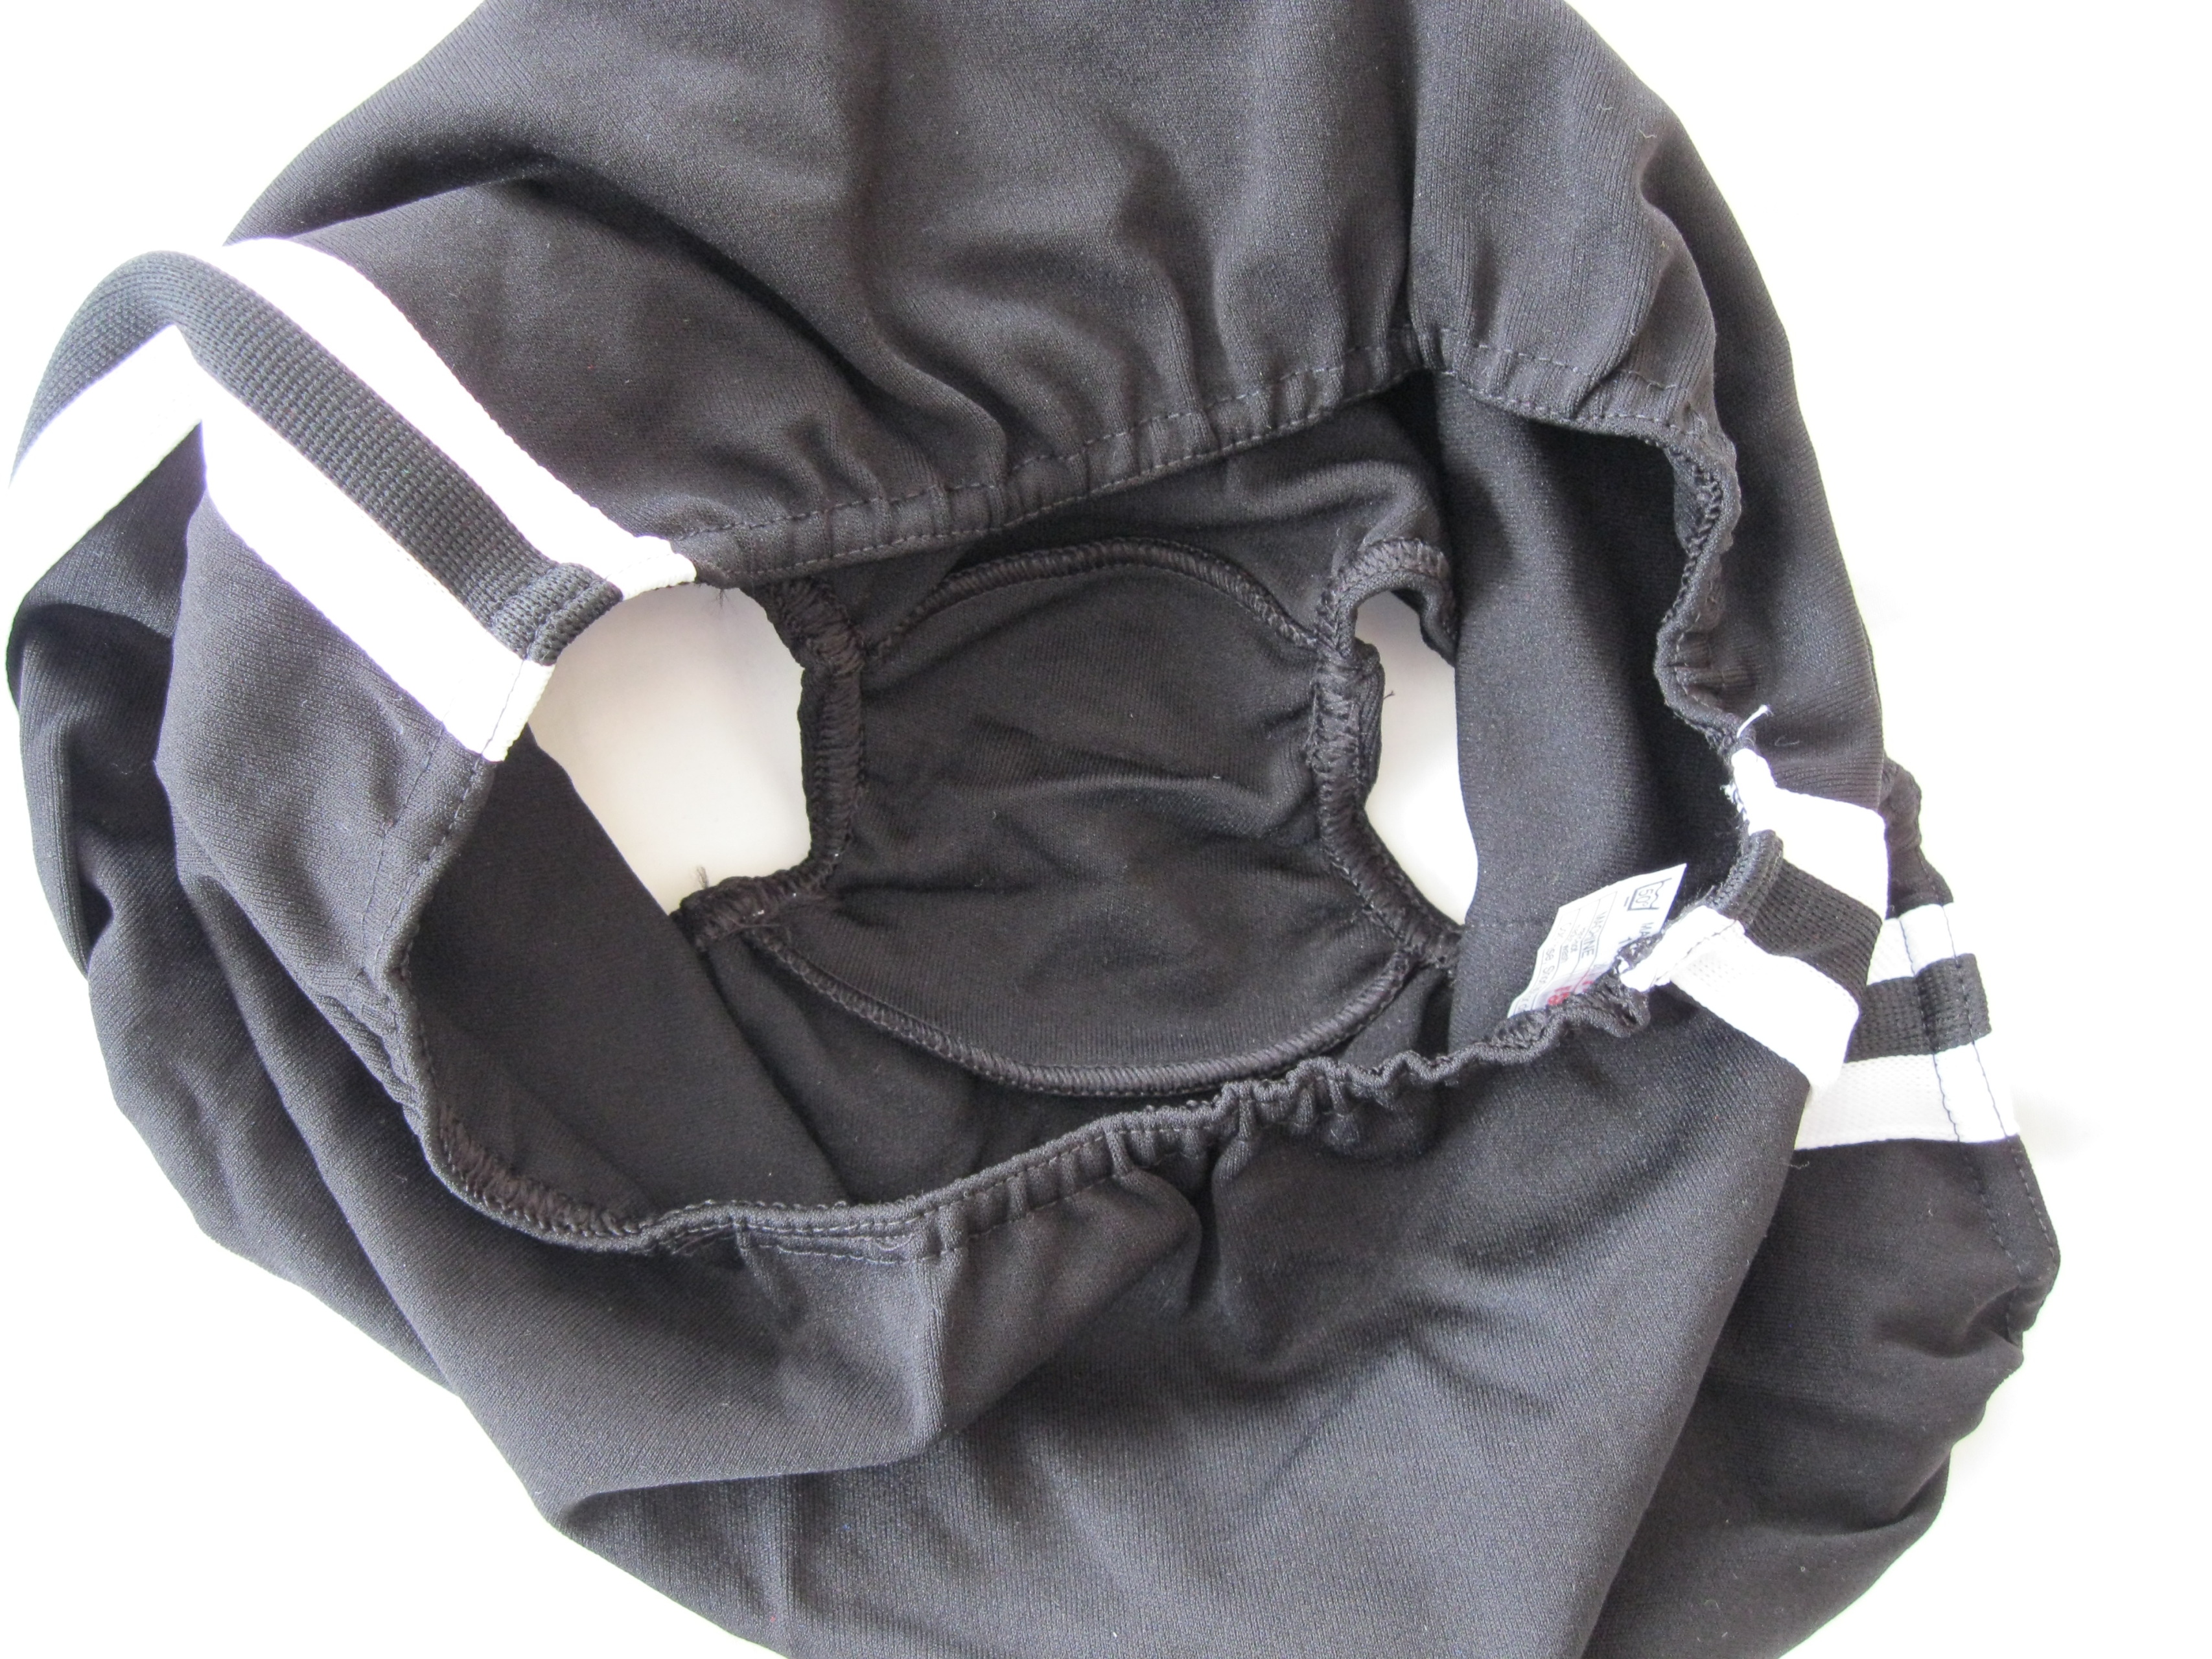 Girls Classic BLACK (LARGE -Size 28) Gym Knickers (Athletics Shorts/ Underwear) BY GYMPHLEX